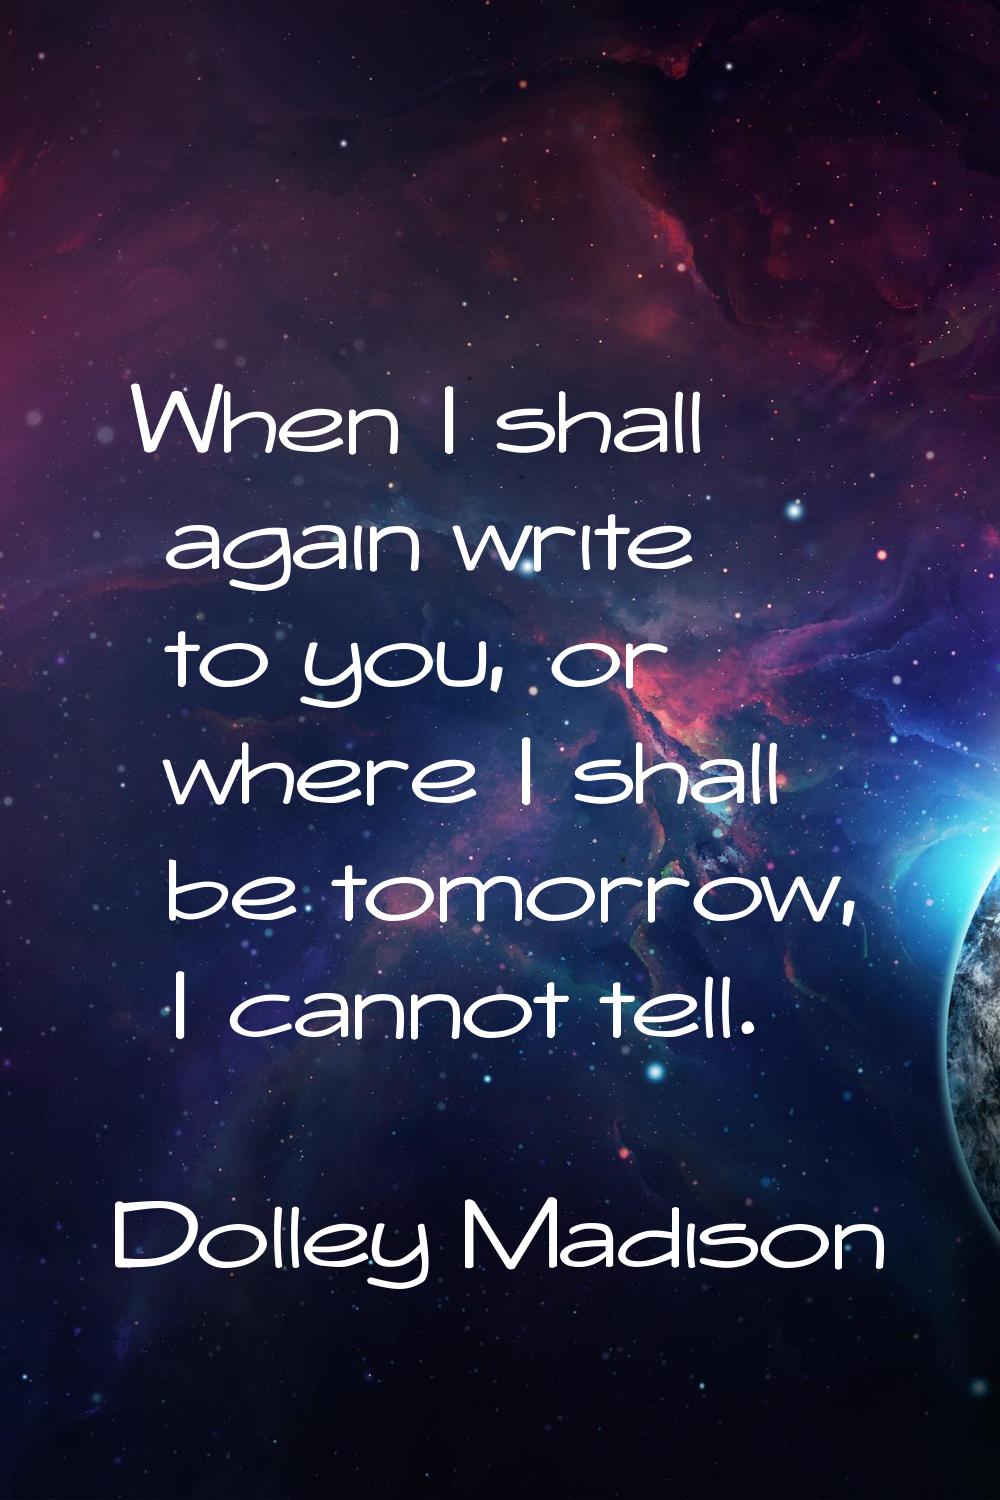 When I shall again write to you, or where I shall be tomorrow, I cannot tell.